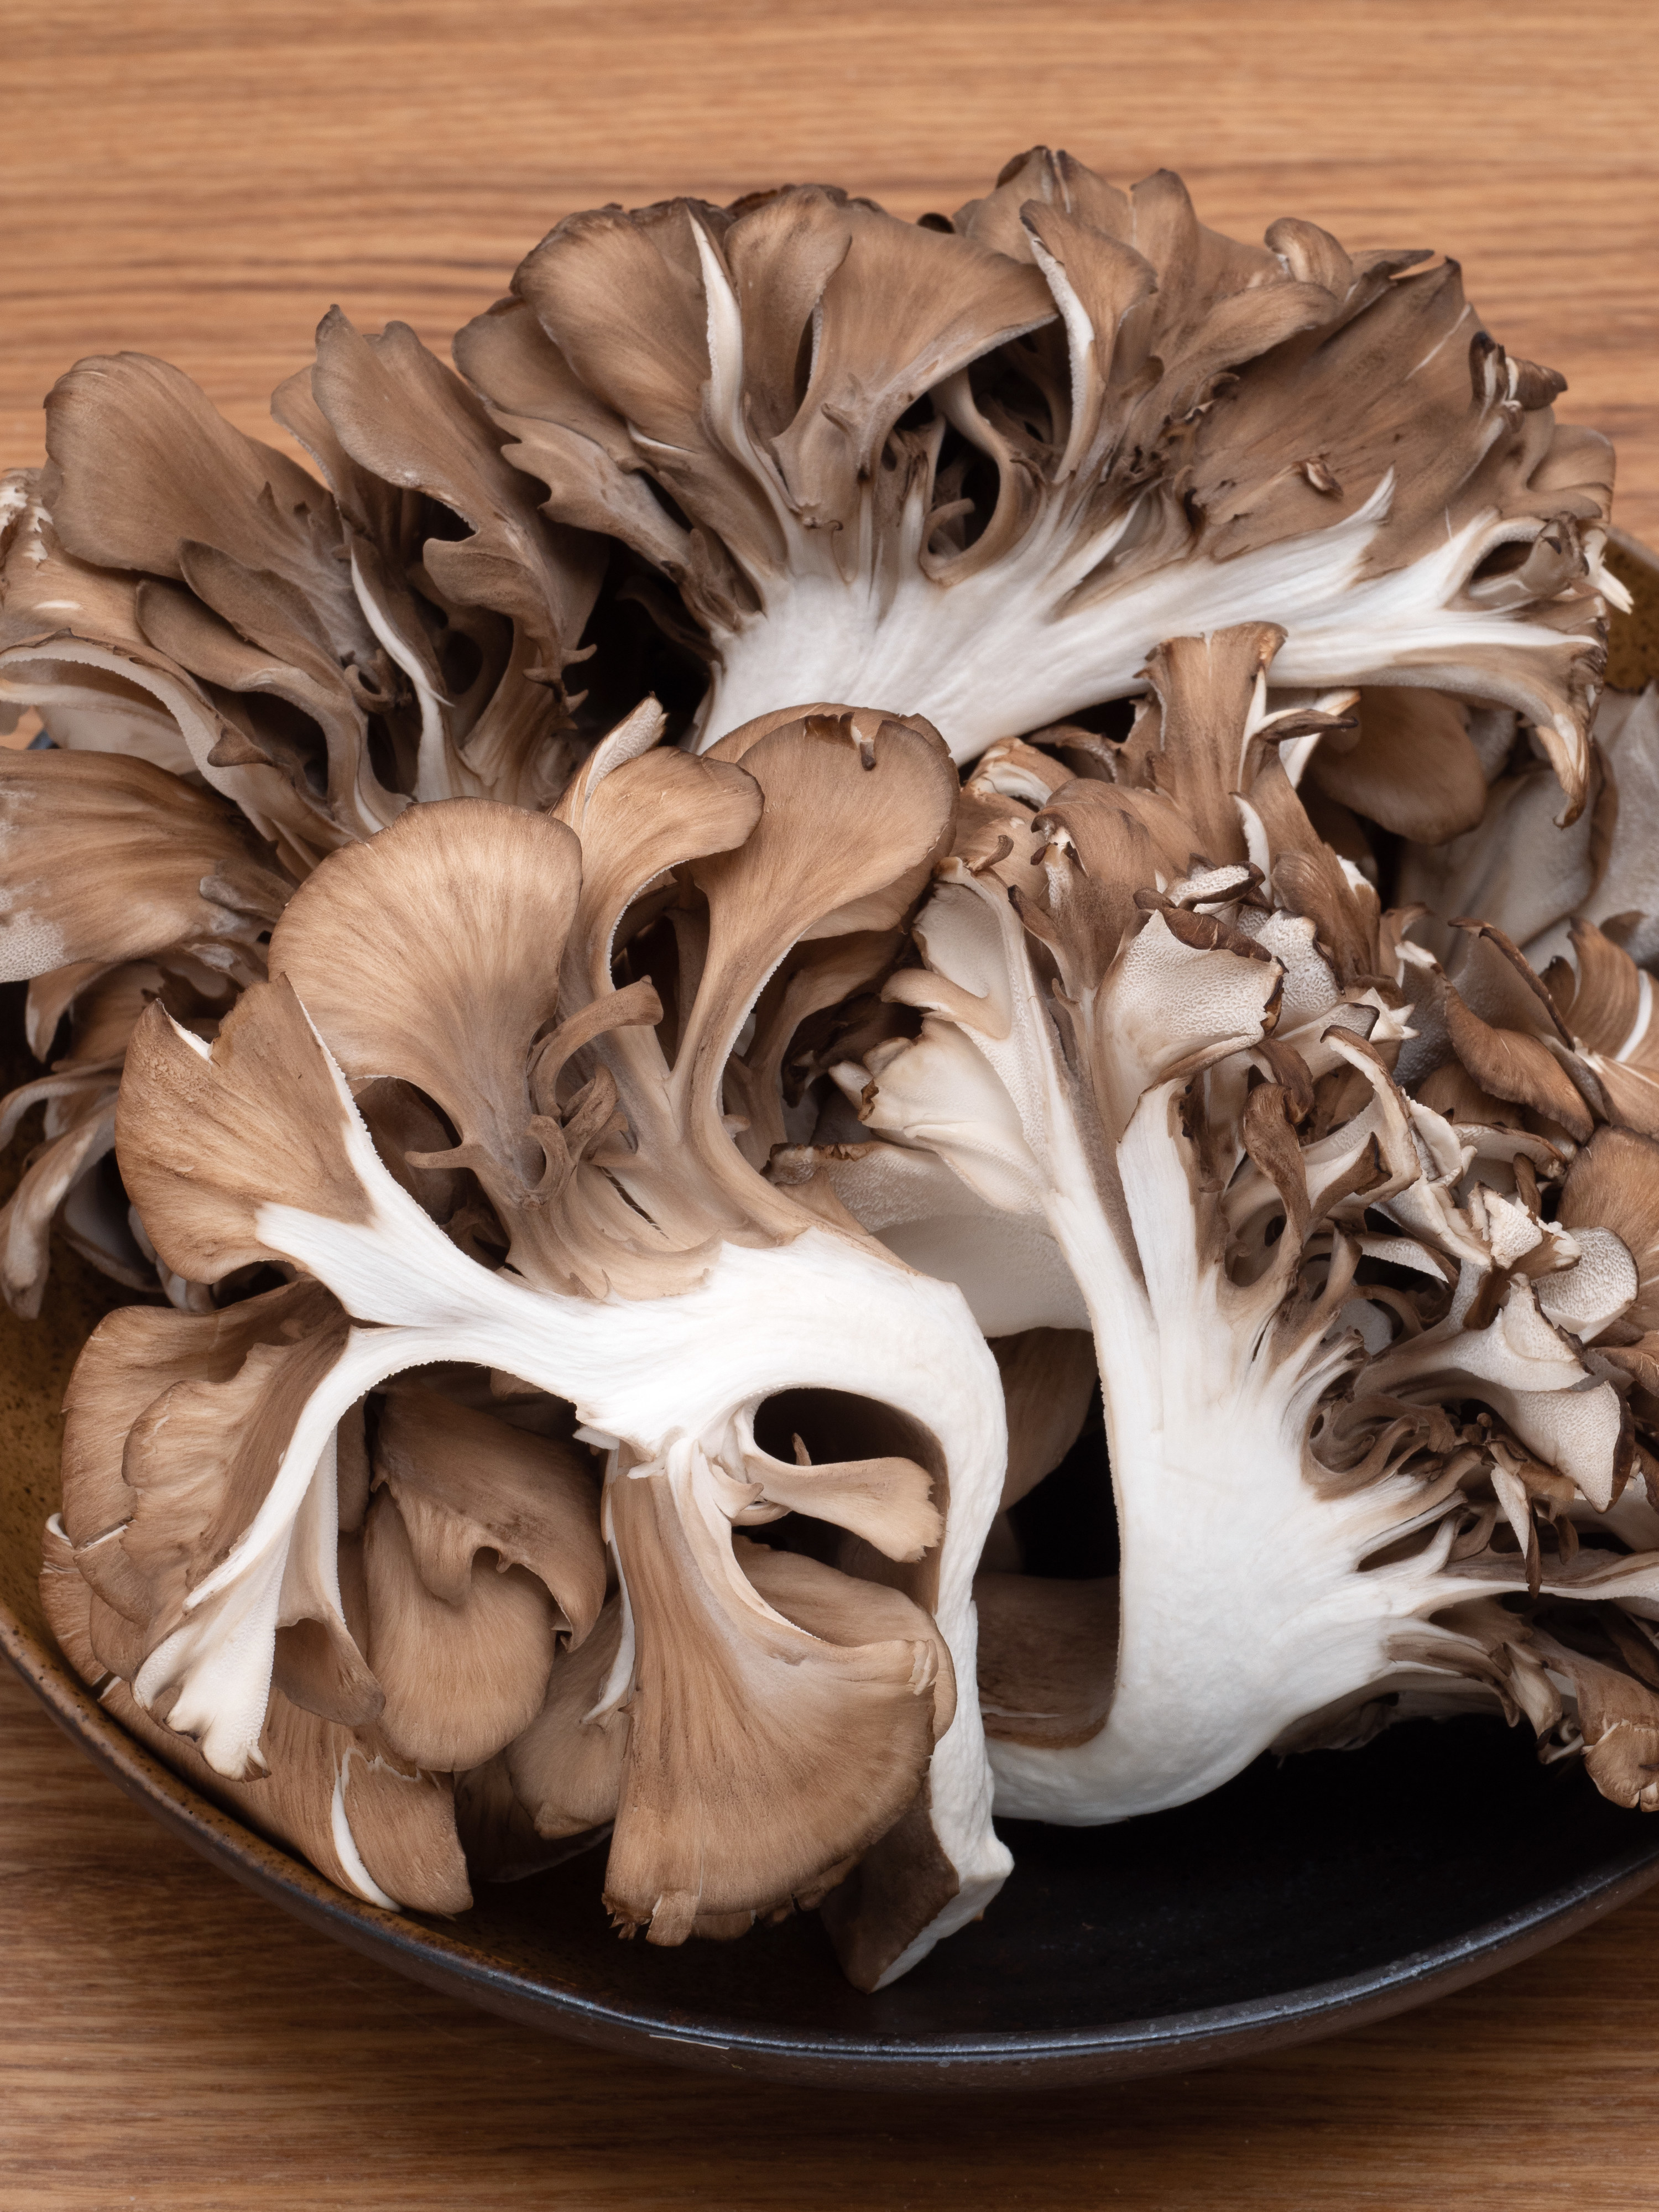 wild mushrooms on a plate